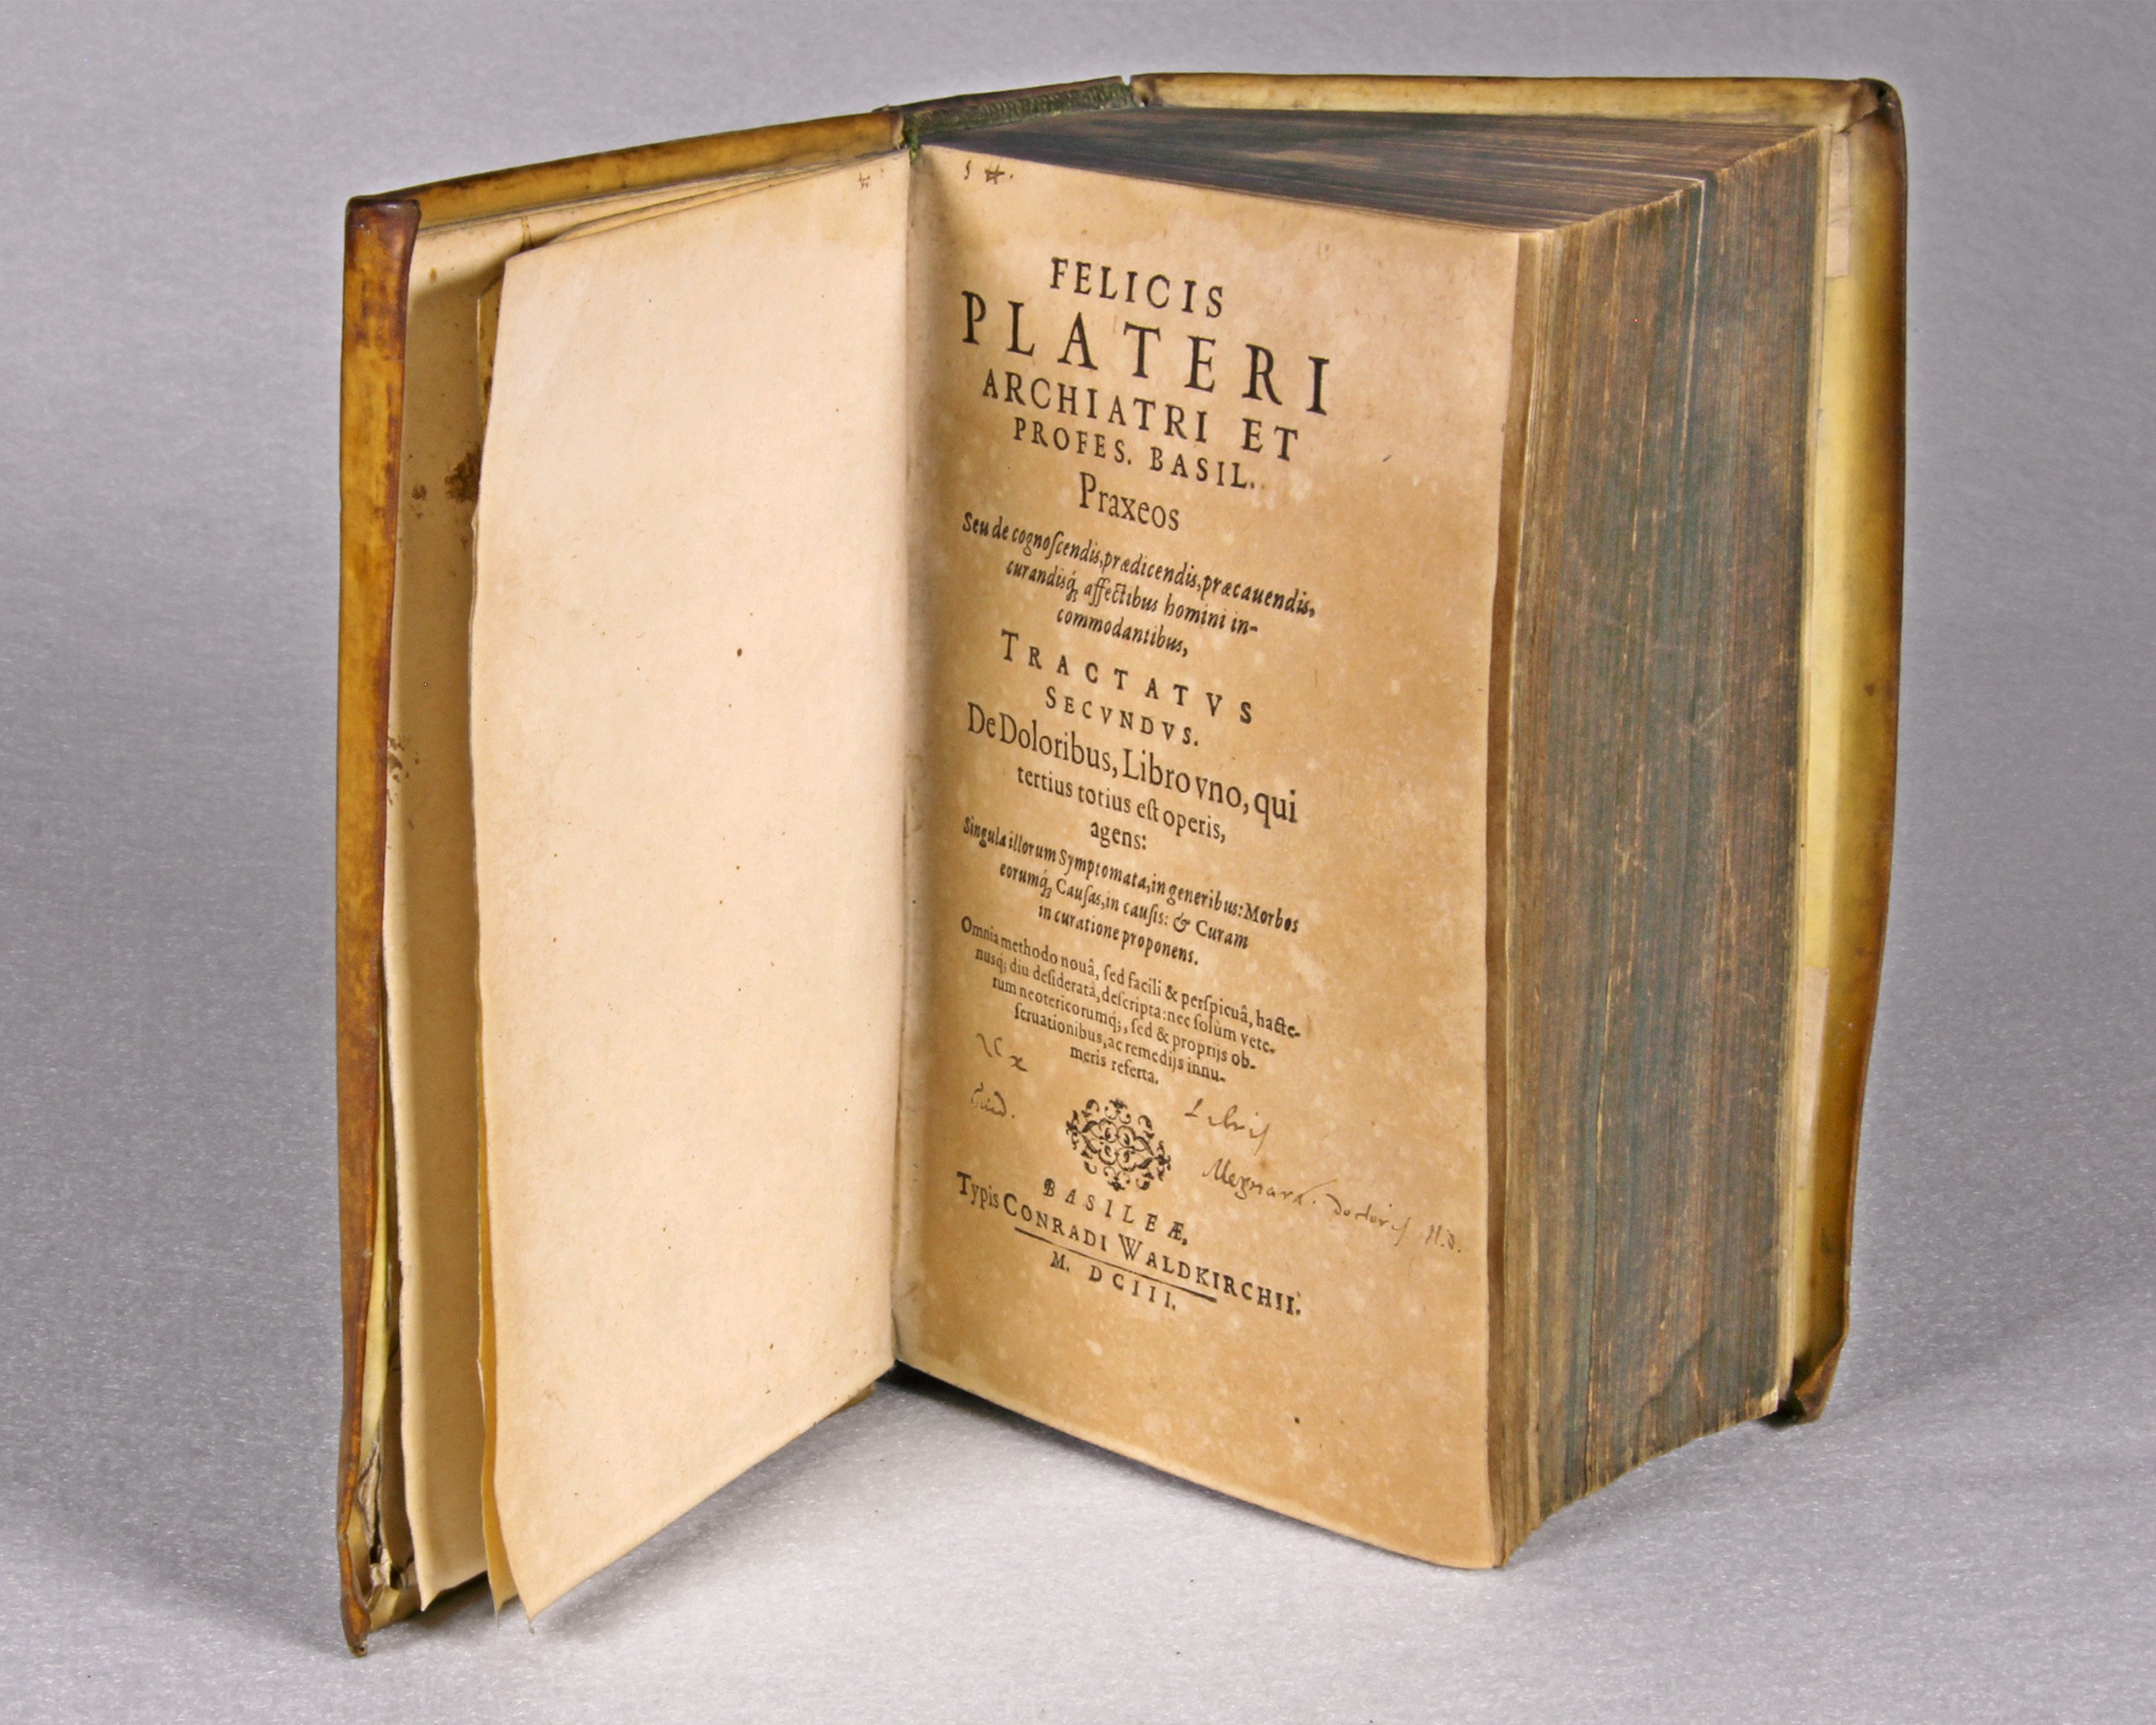 Felix Platter, Tractatus Secundus. De Doloribus, Libro Uno (Wilhelm-Fabry-Museum CC BY-NC-SA)